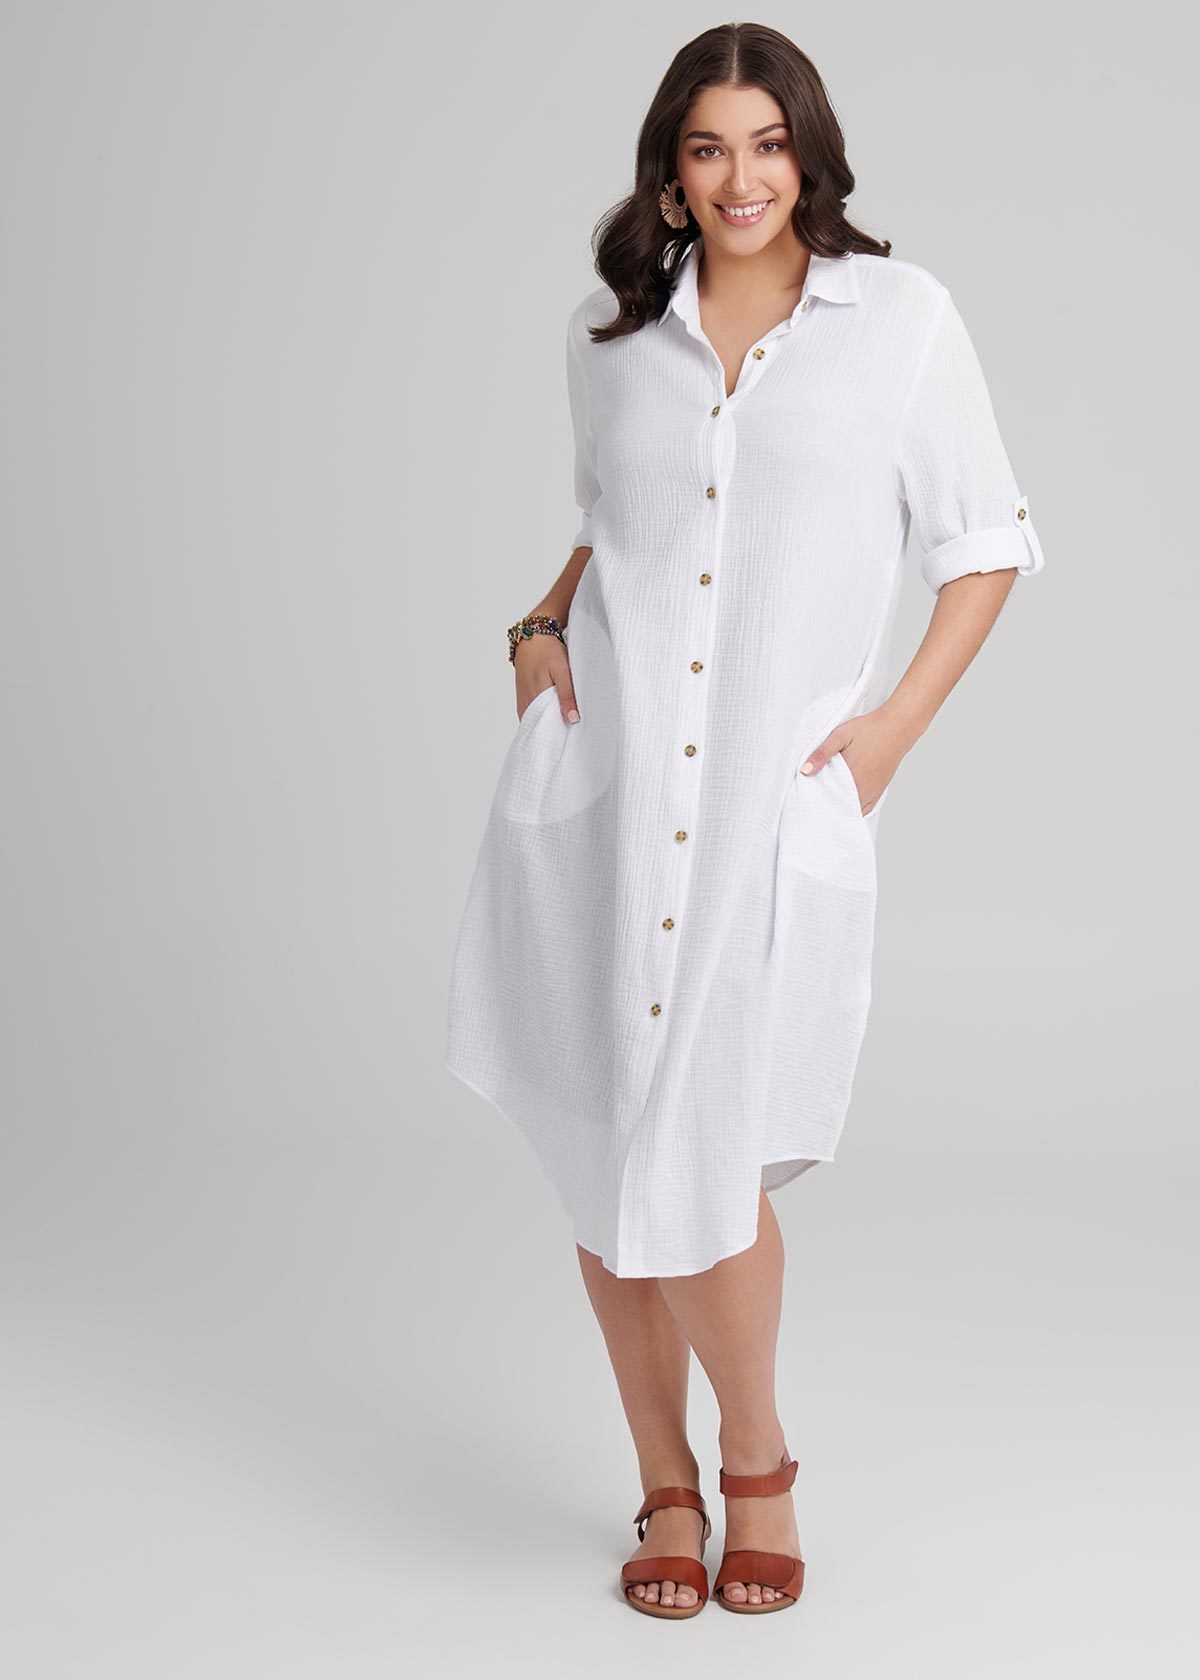 Cotton Malta Shirt in White, Sizes 12-30 | Taking Shape NZ